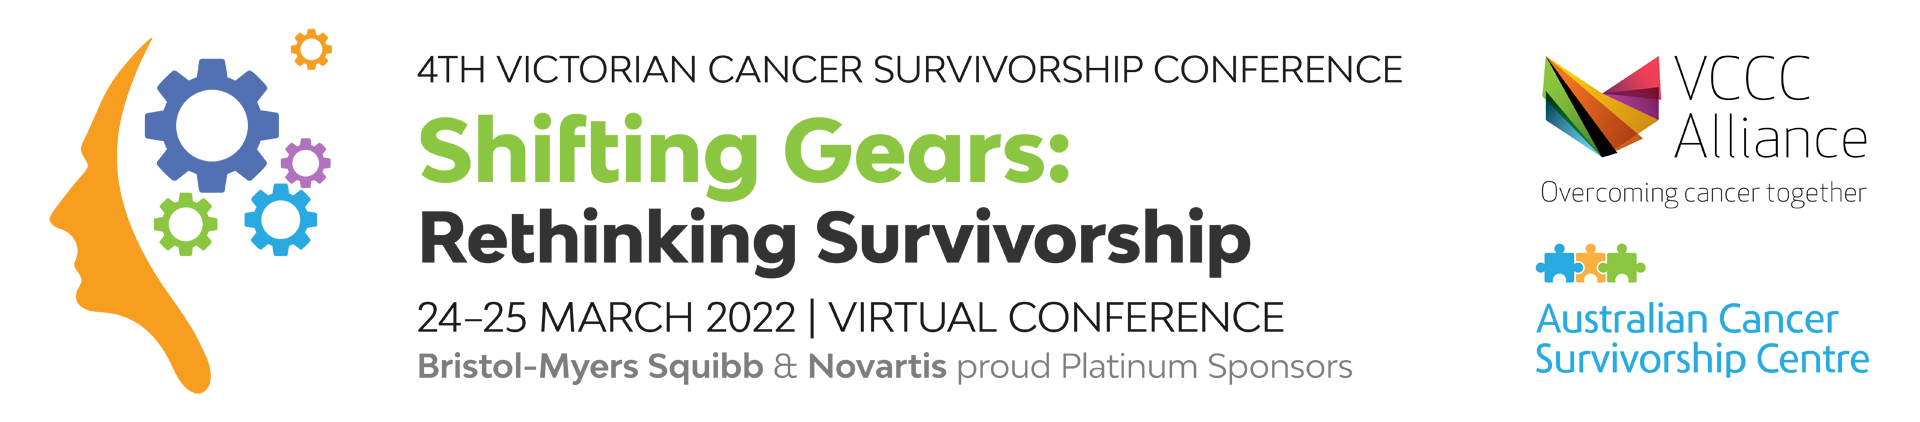 4th Victorian Cancer Survivorship Conference